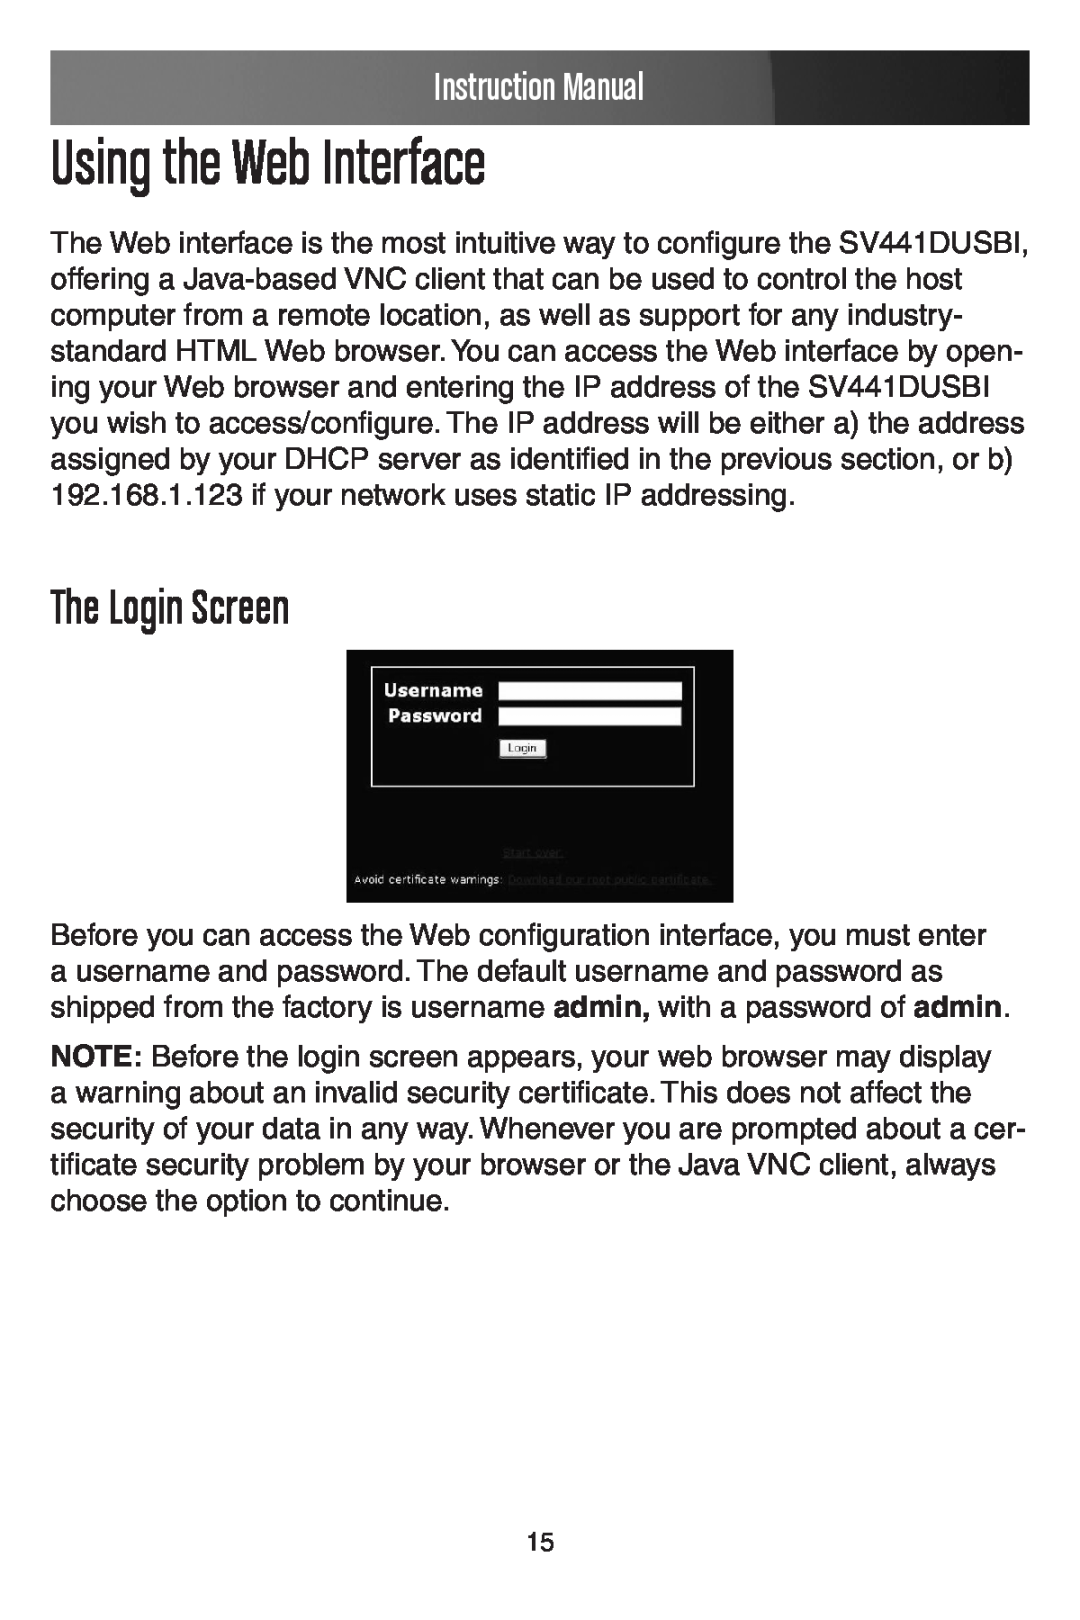 StarTech.com SV441DUSBI instruction manual Using the Web Interface, The Login Screen, Instruction Manual 